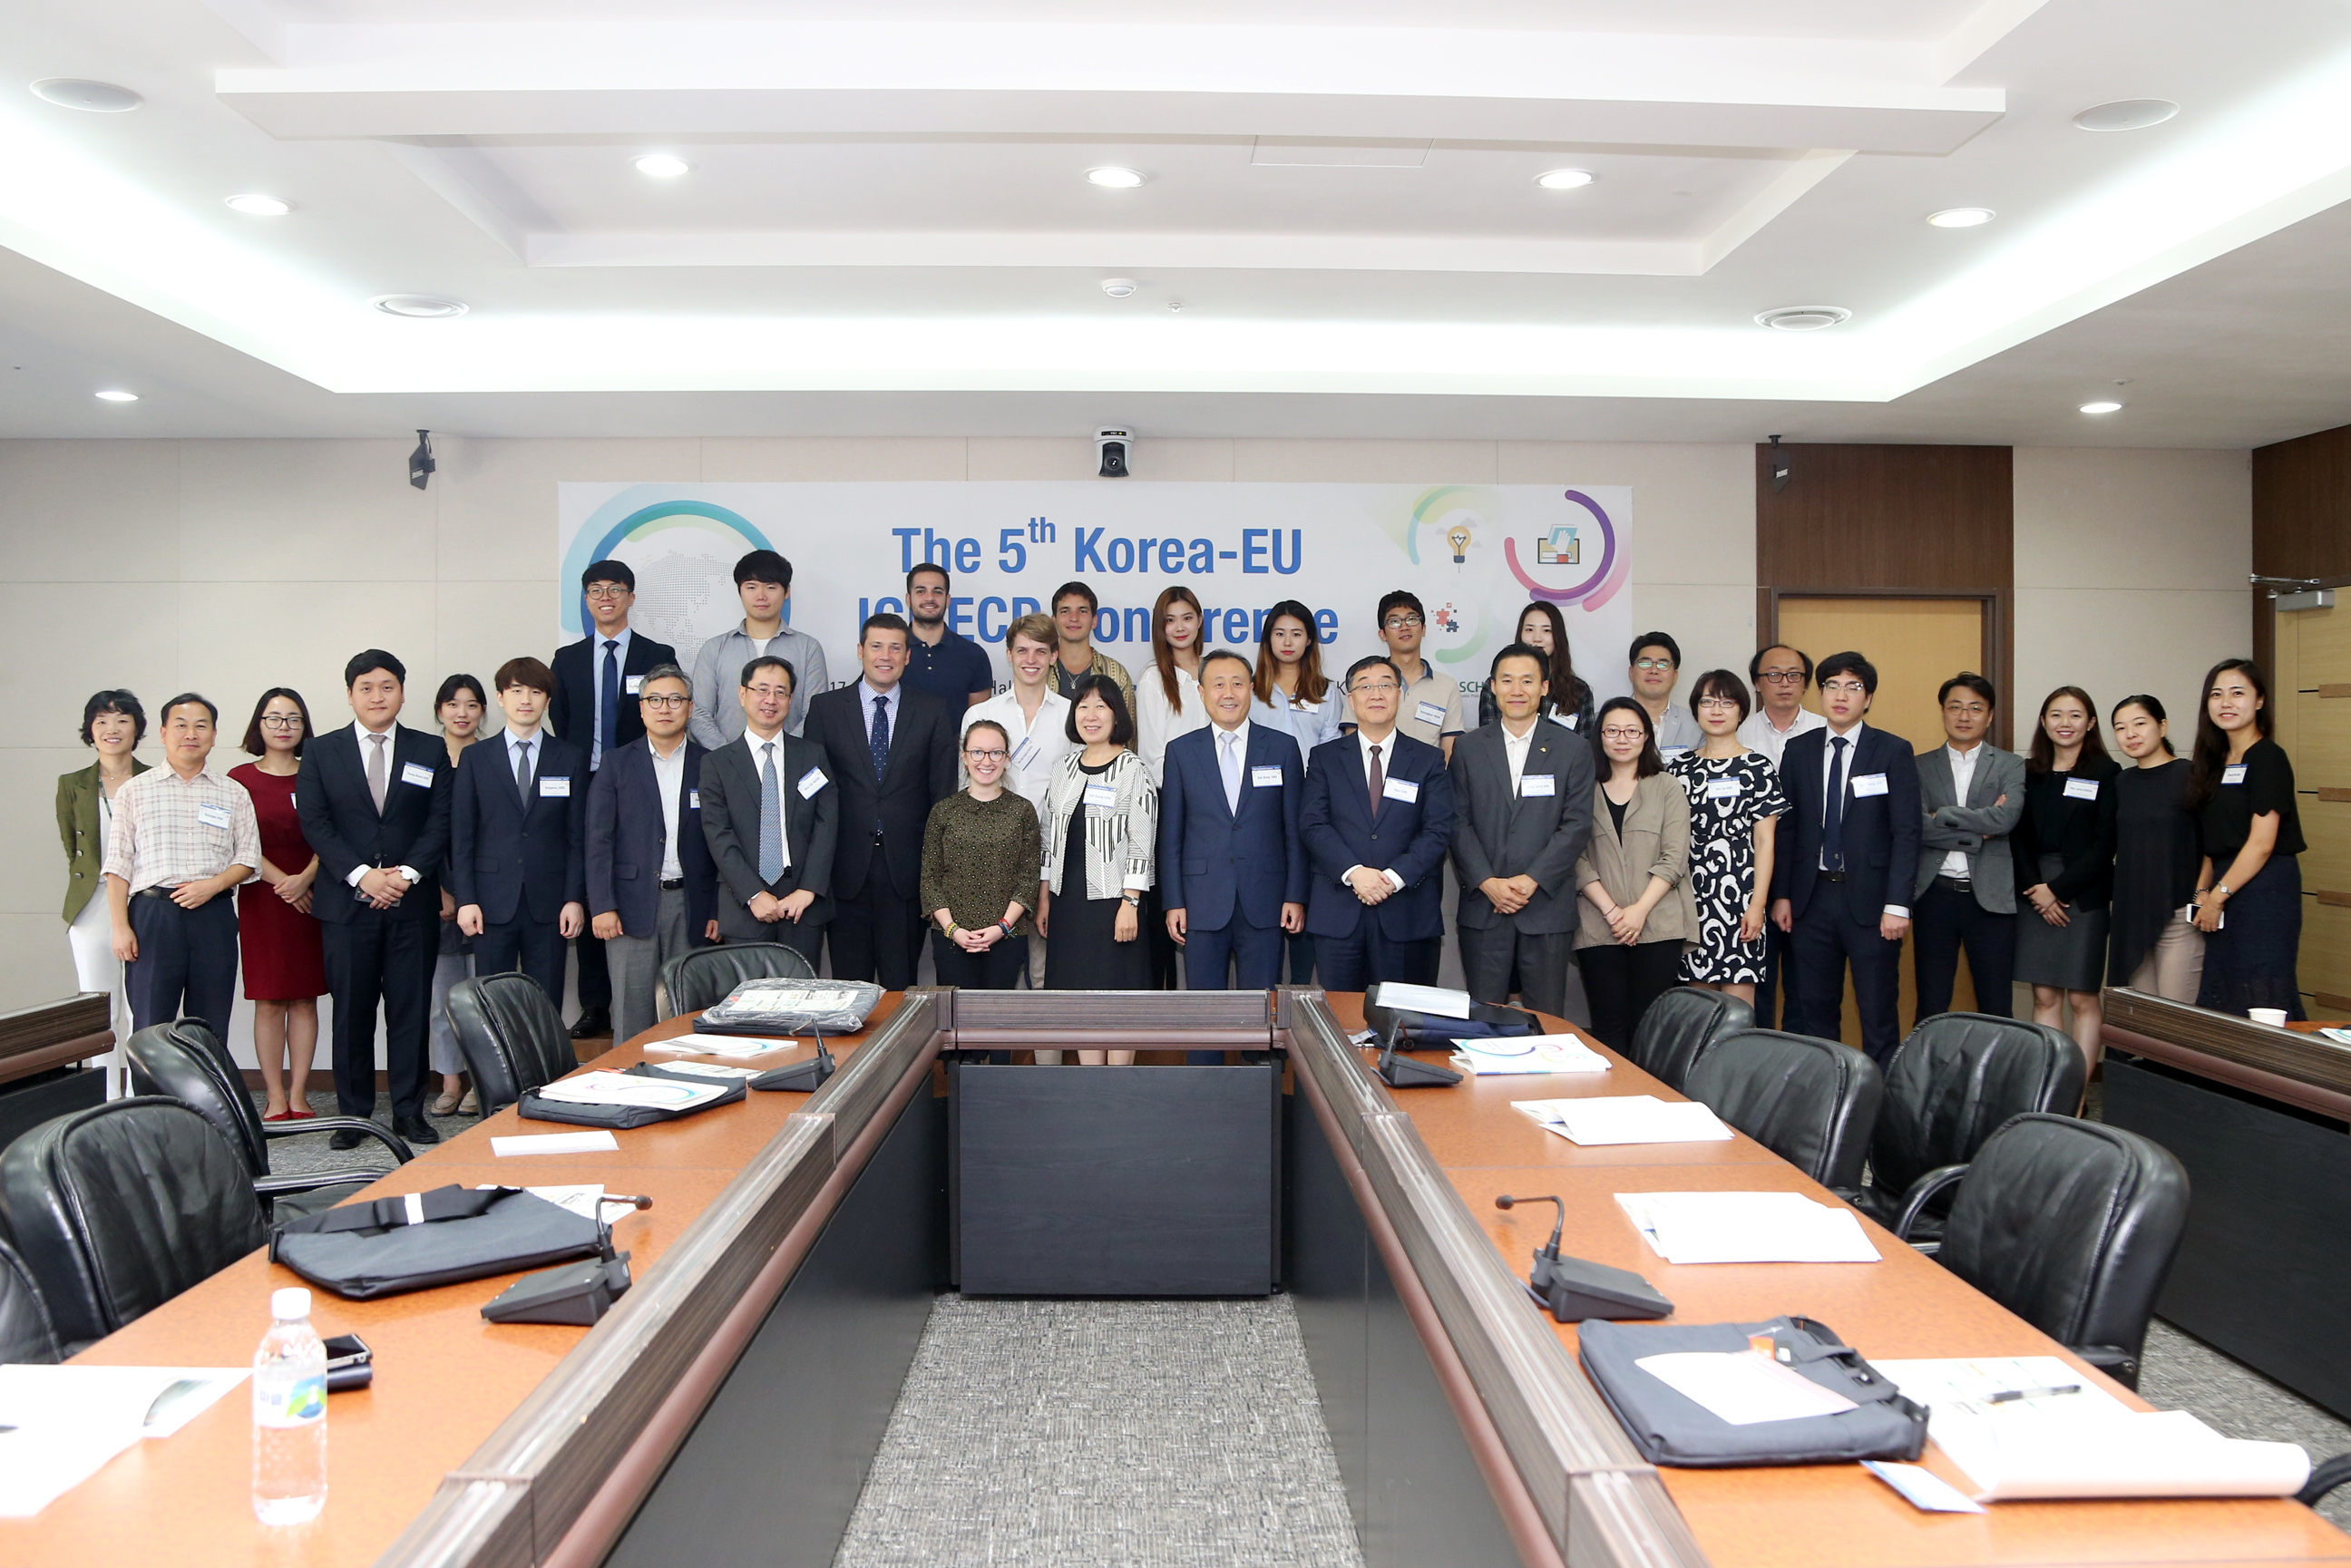 KDI School brings together the educators of Korea and EU